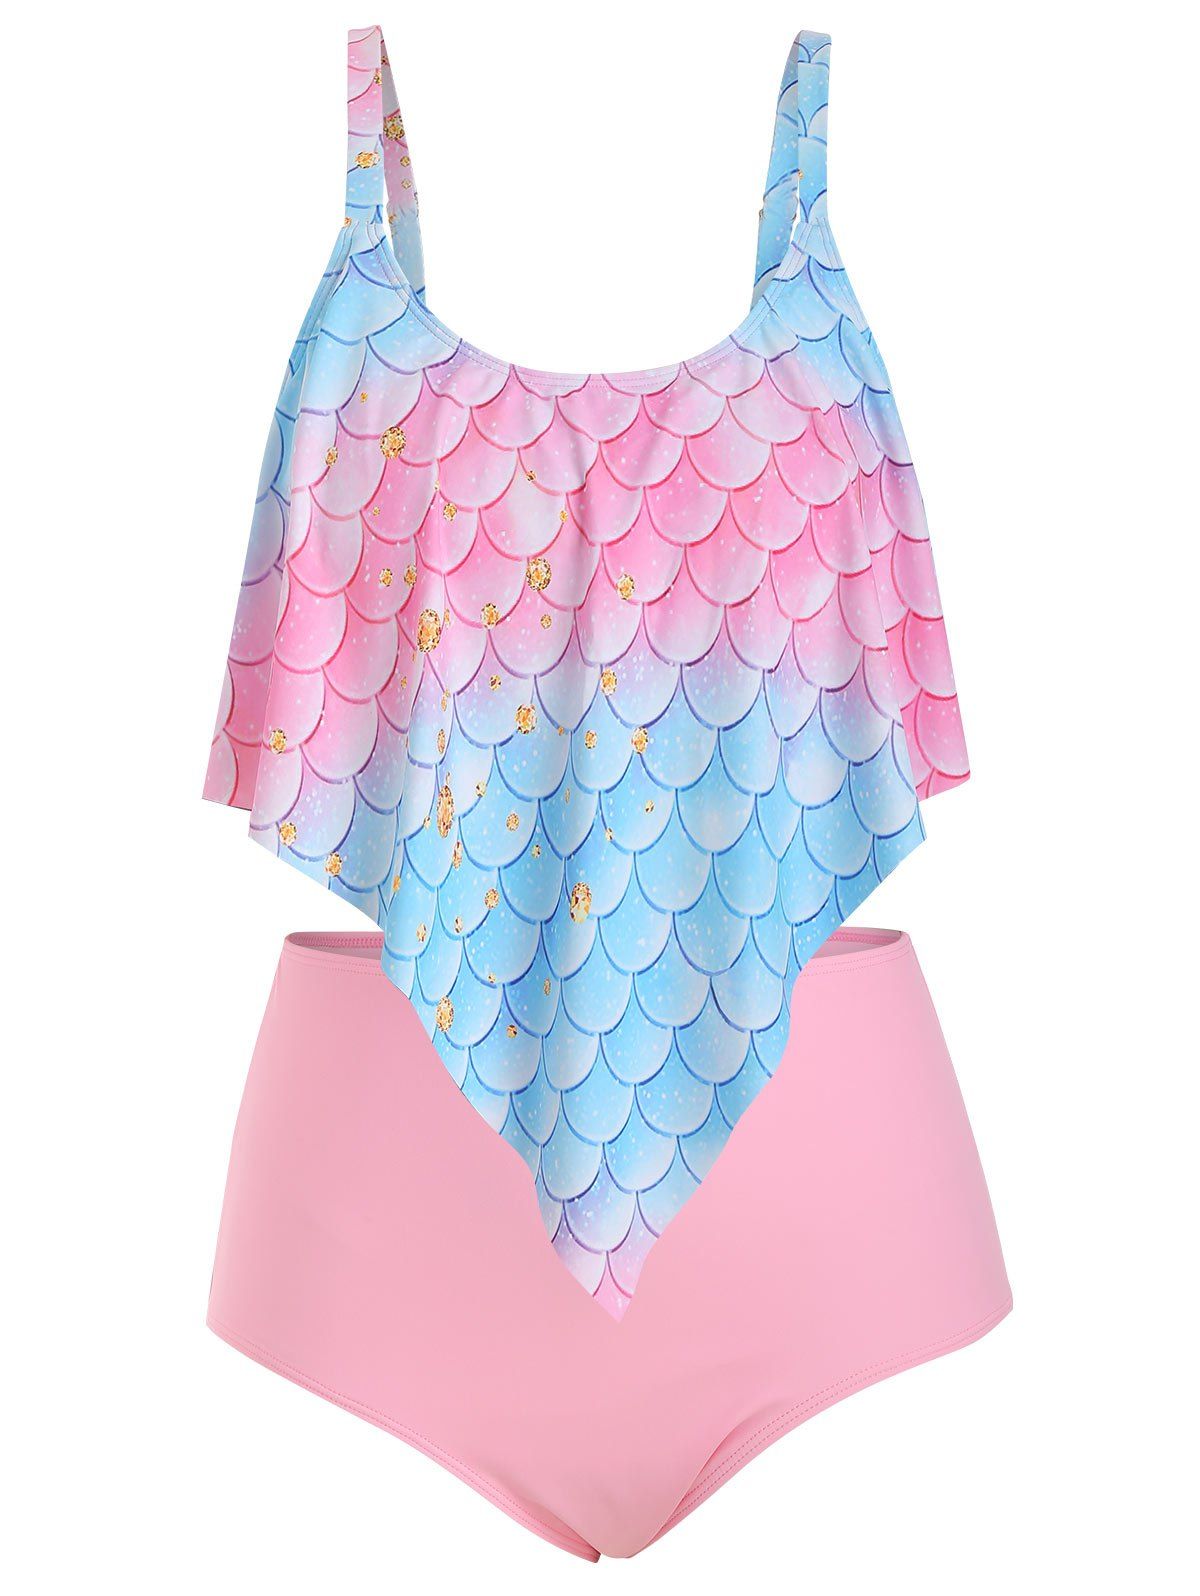 Plus Size Ruffle Fish Scale Print Tankini Swimsuit - multicolor B 5X